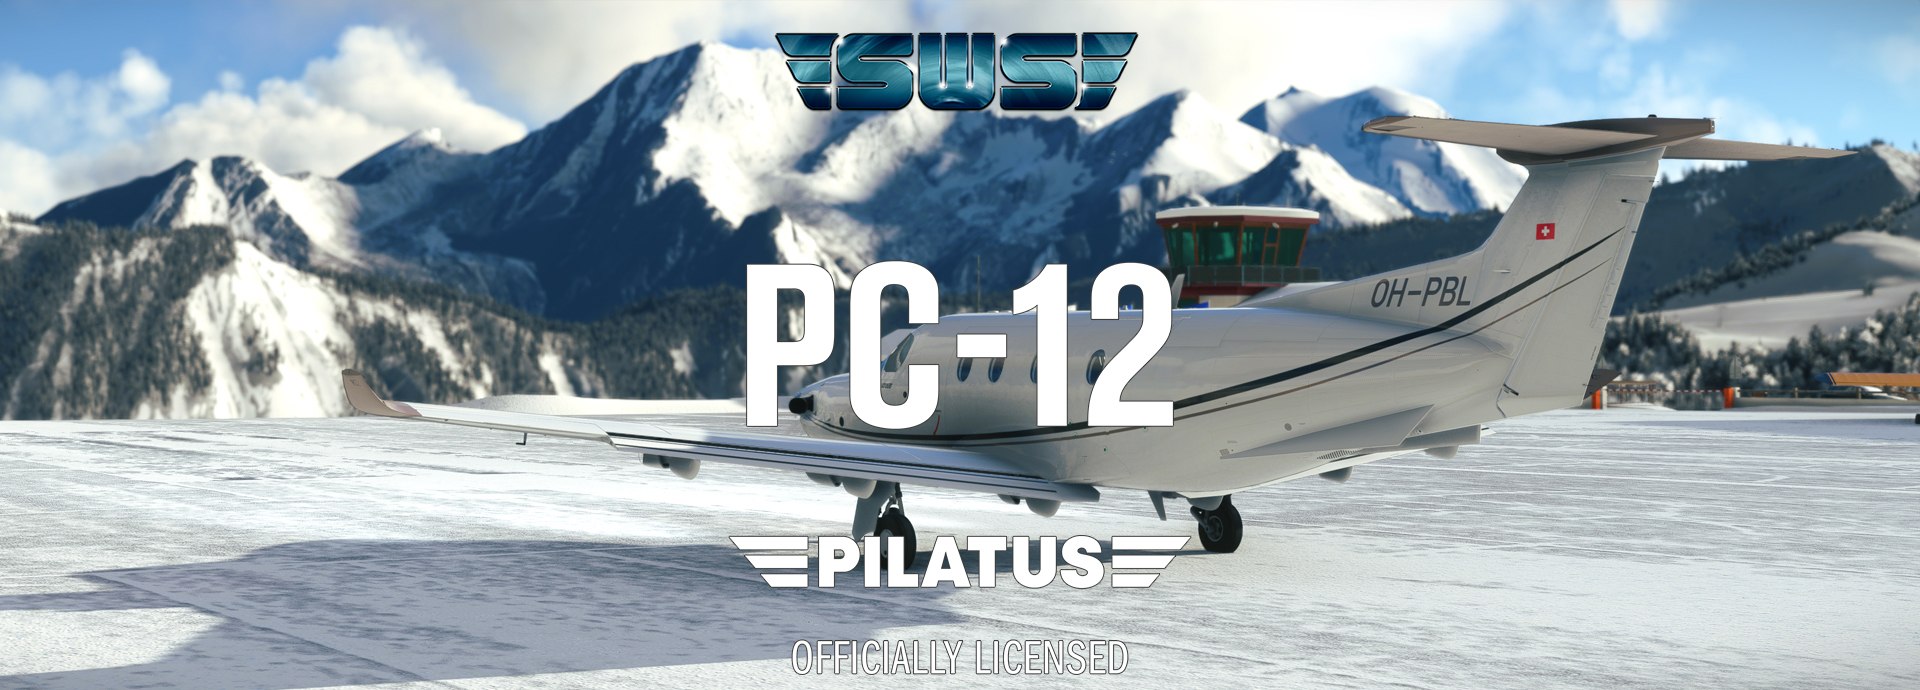 SimWorks Studios - Pilatus PC-12